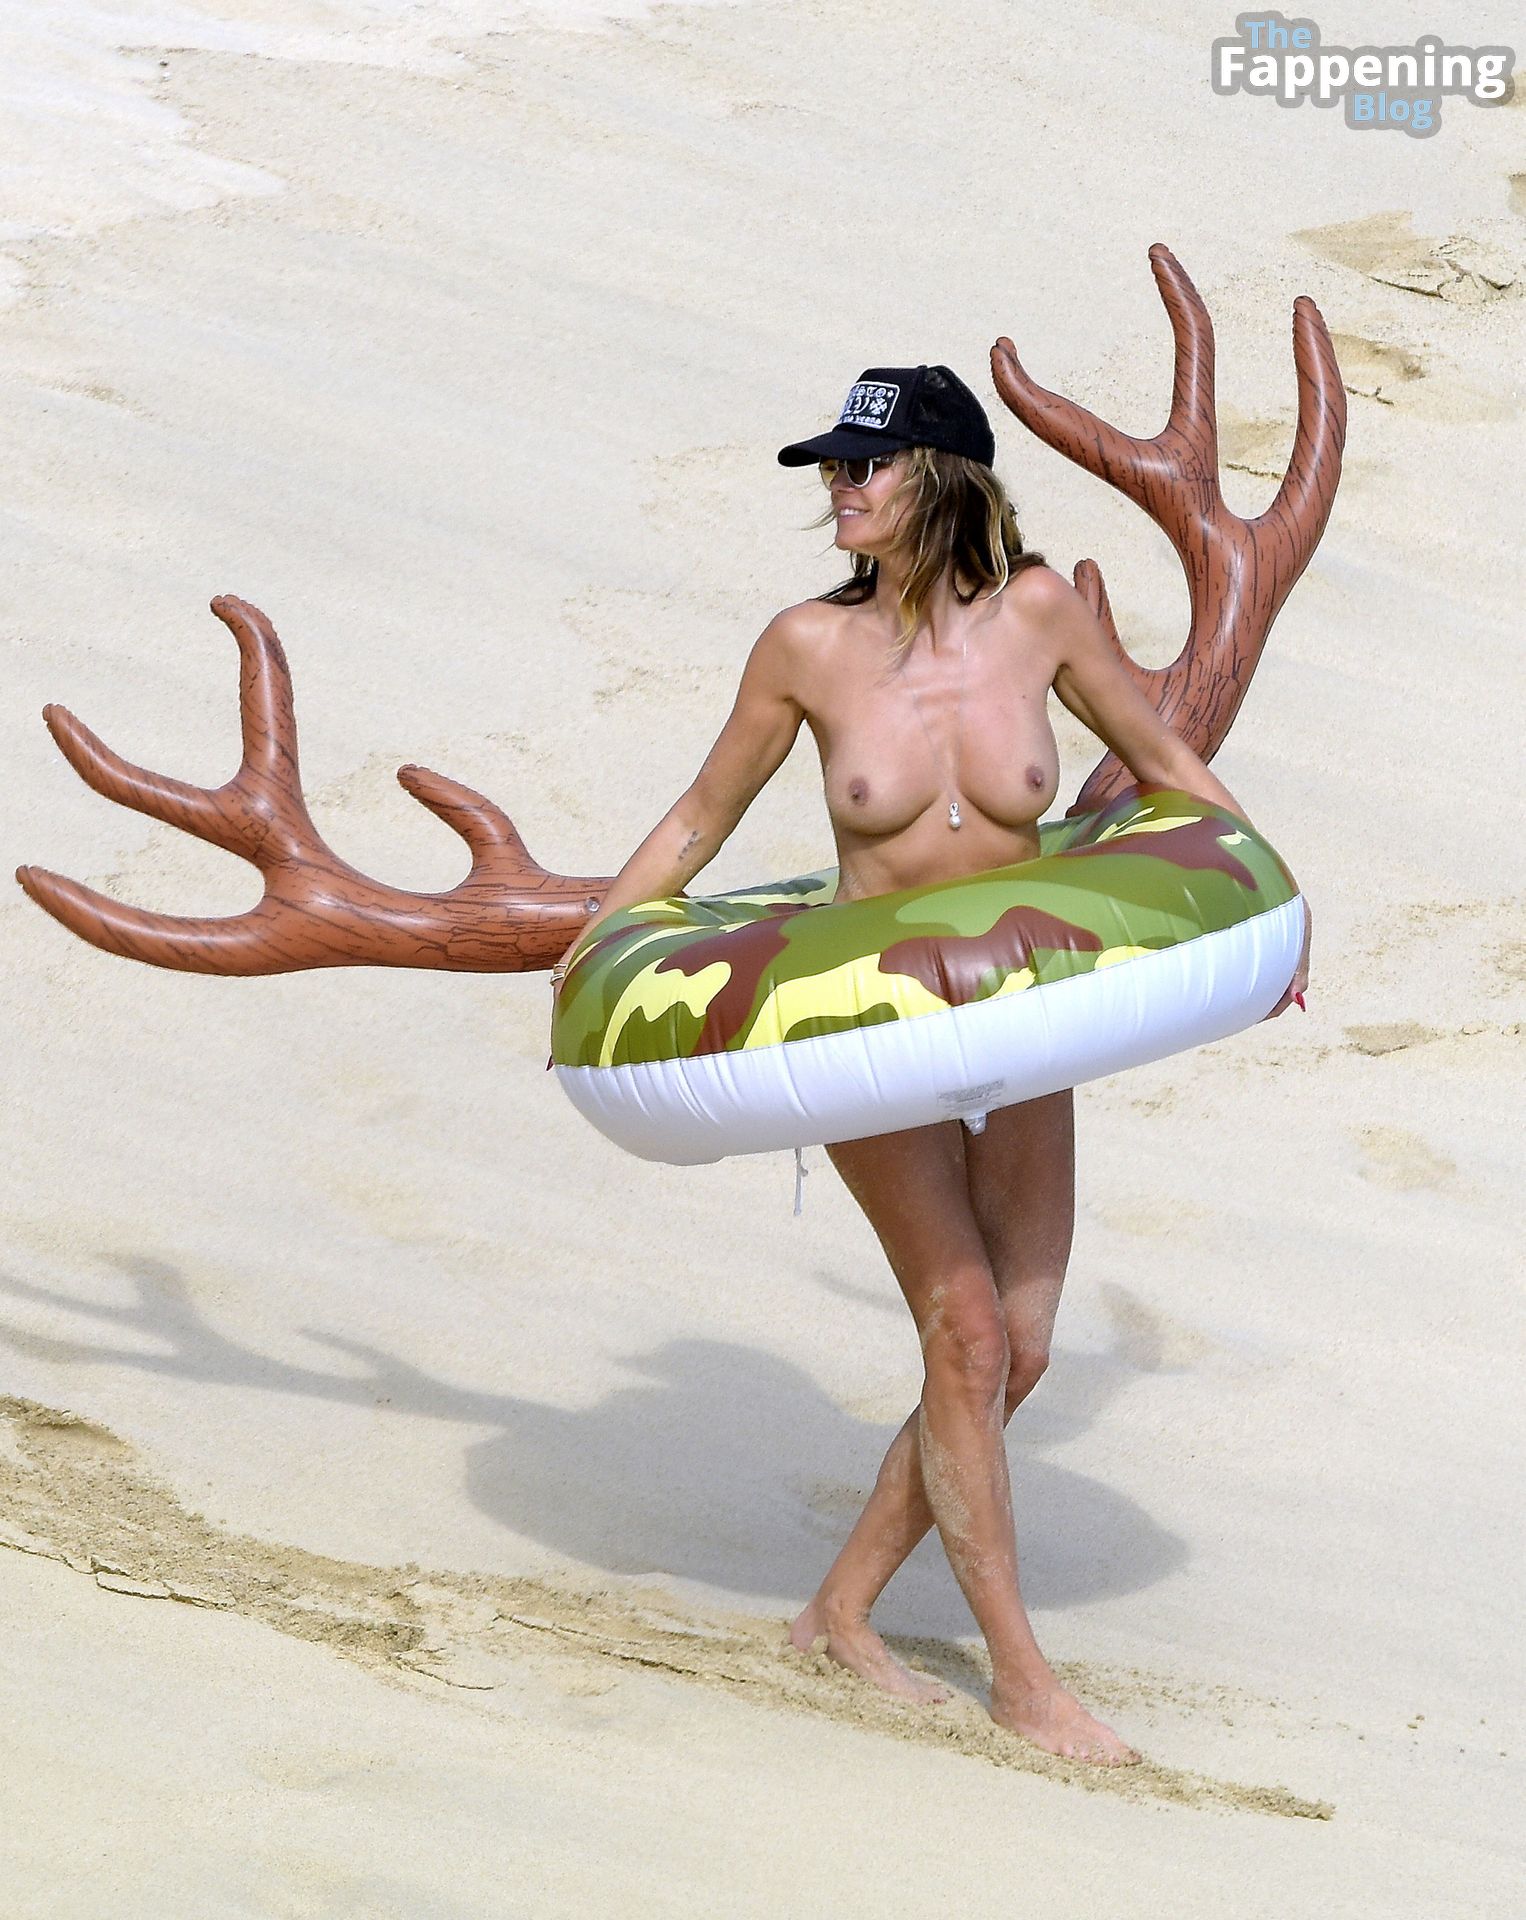 Heidi-Klum-Nude-40-The-Fappening-Blog.jpg